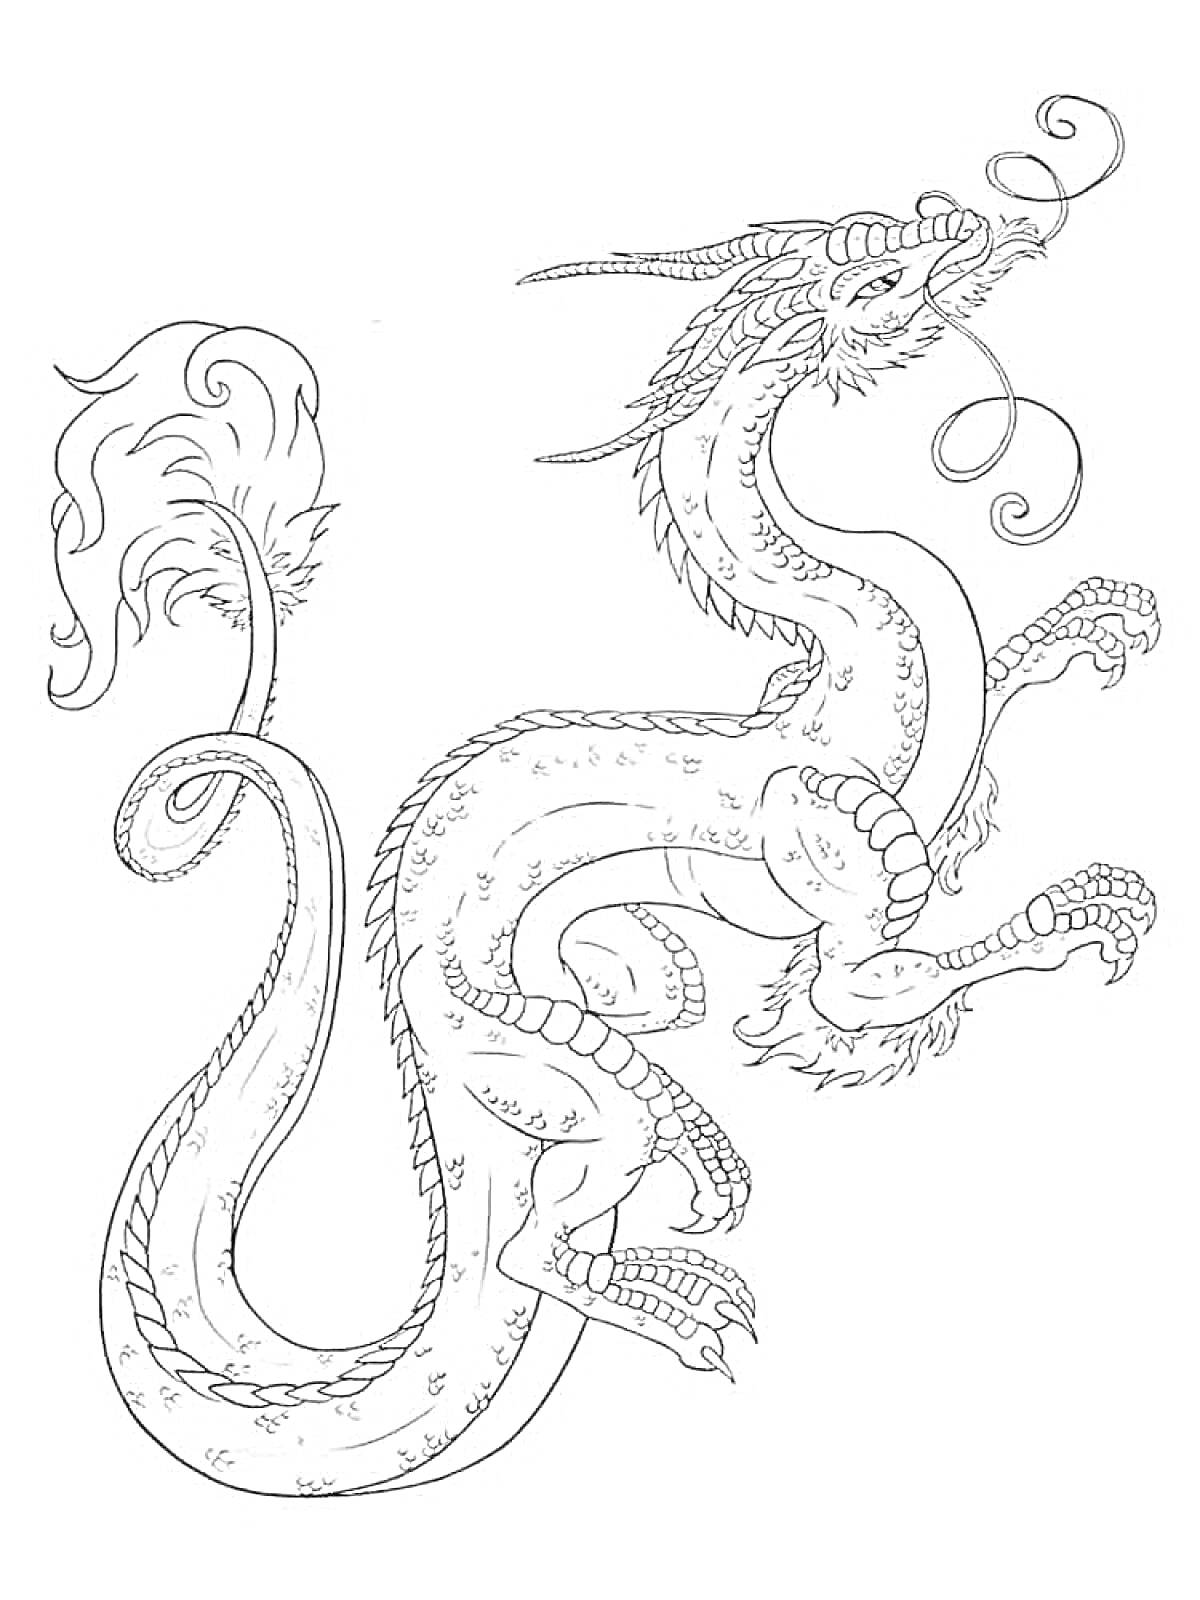 На раскраске изображено: Китайский дракон, Дракон, Мифология, Фэнтези, Длинное тело, Усы, Рога